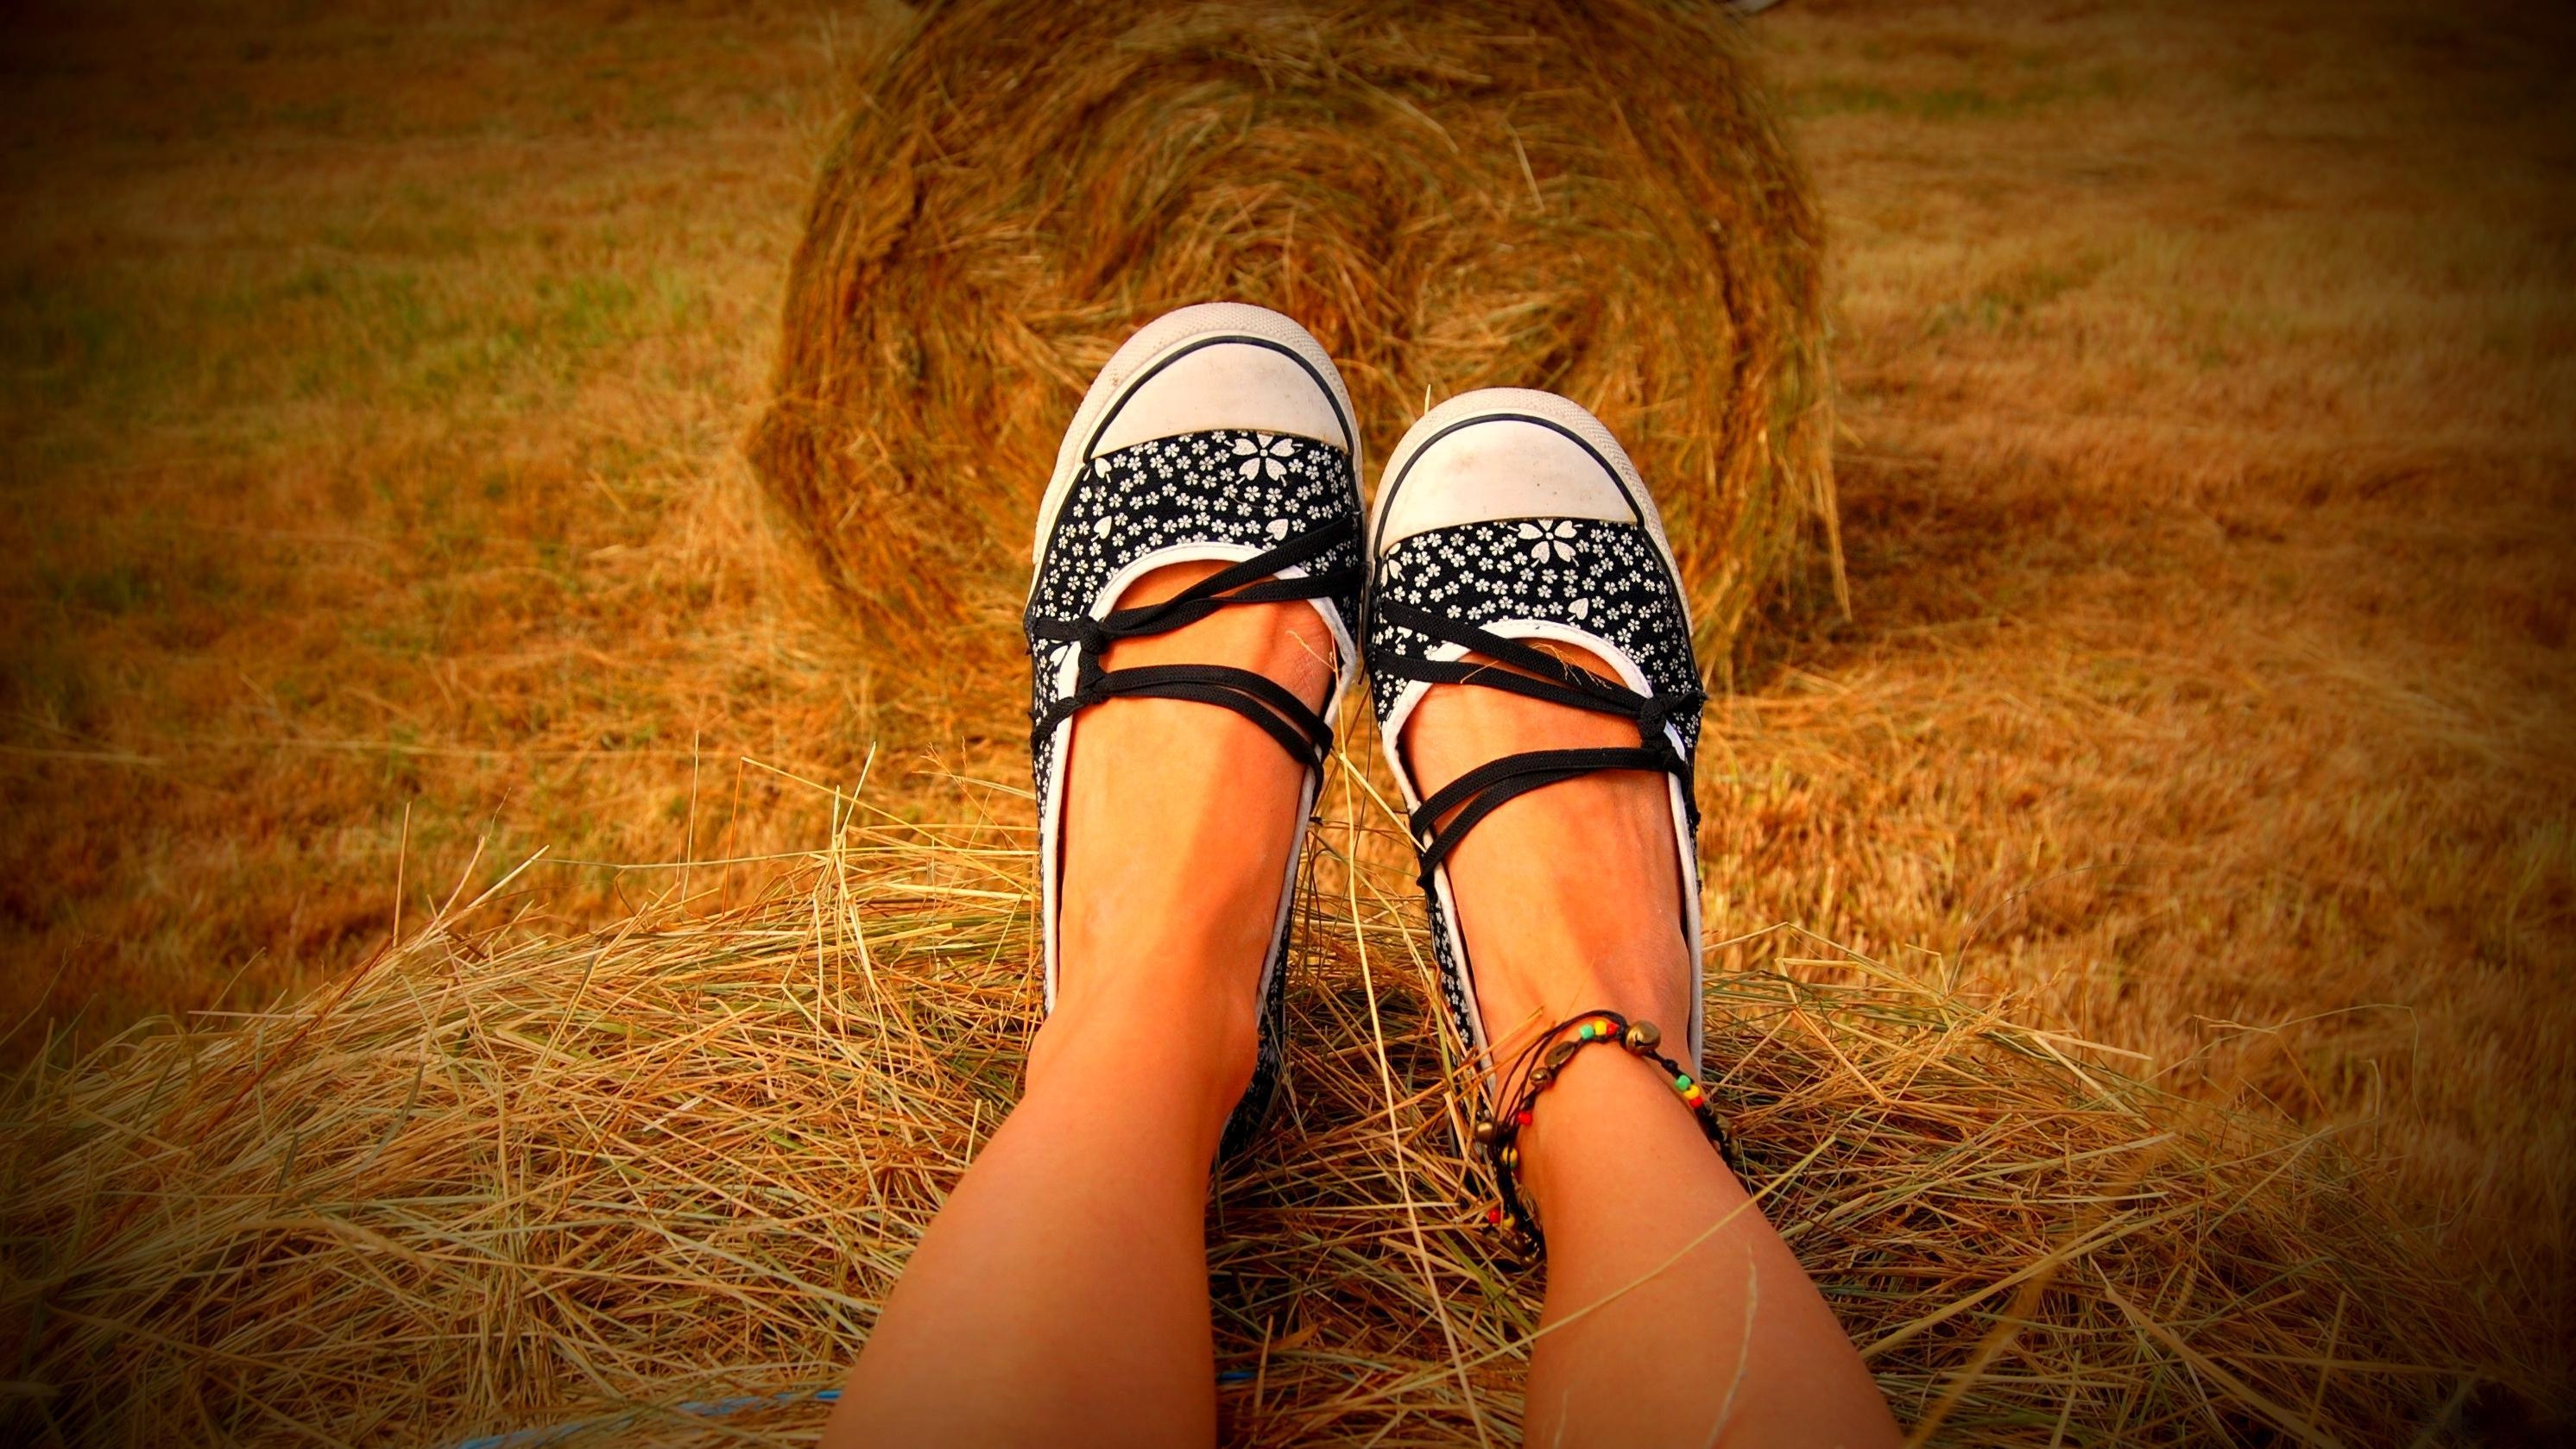 grass, miscellanea, miscellaneous, sit, legs, footwear, hay